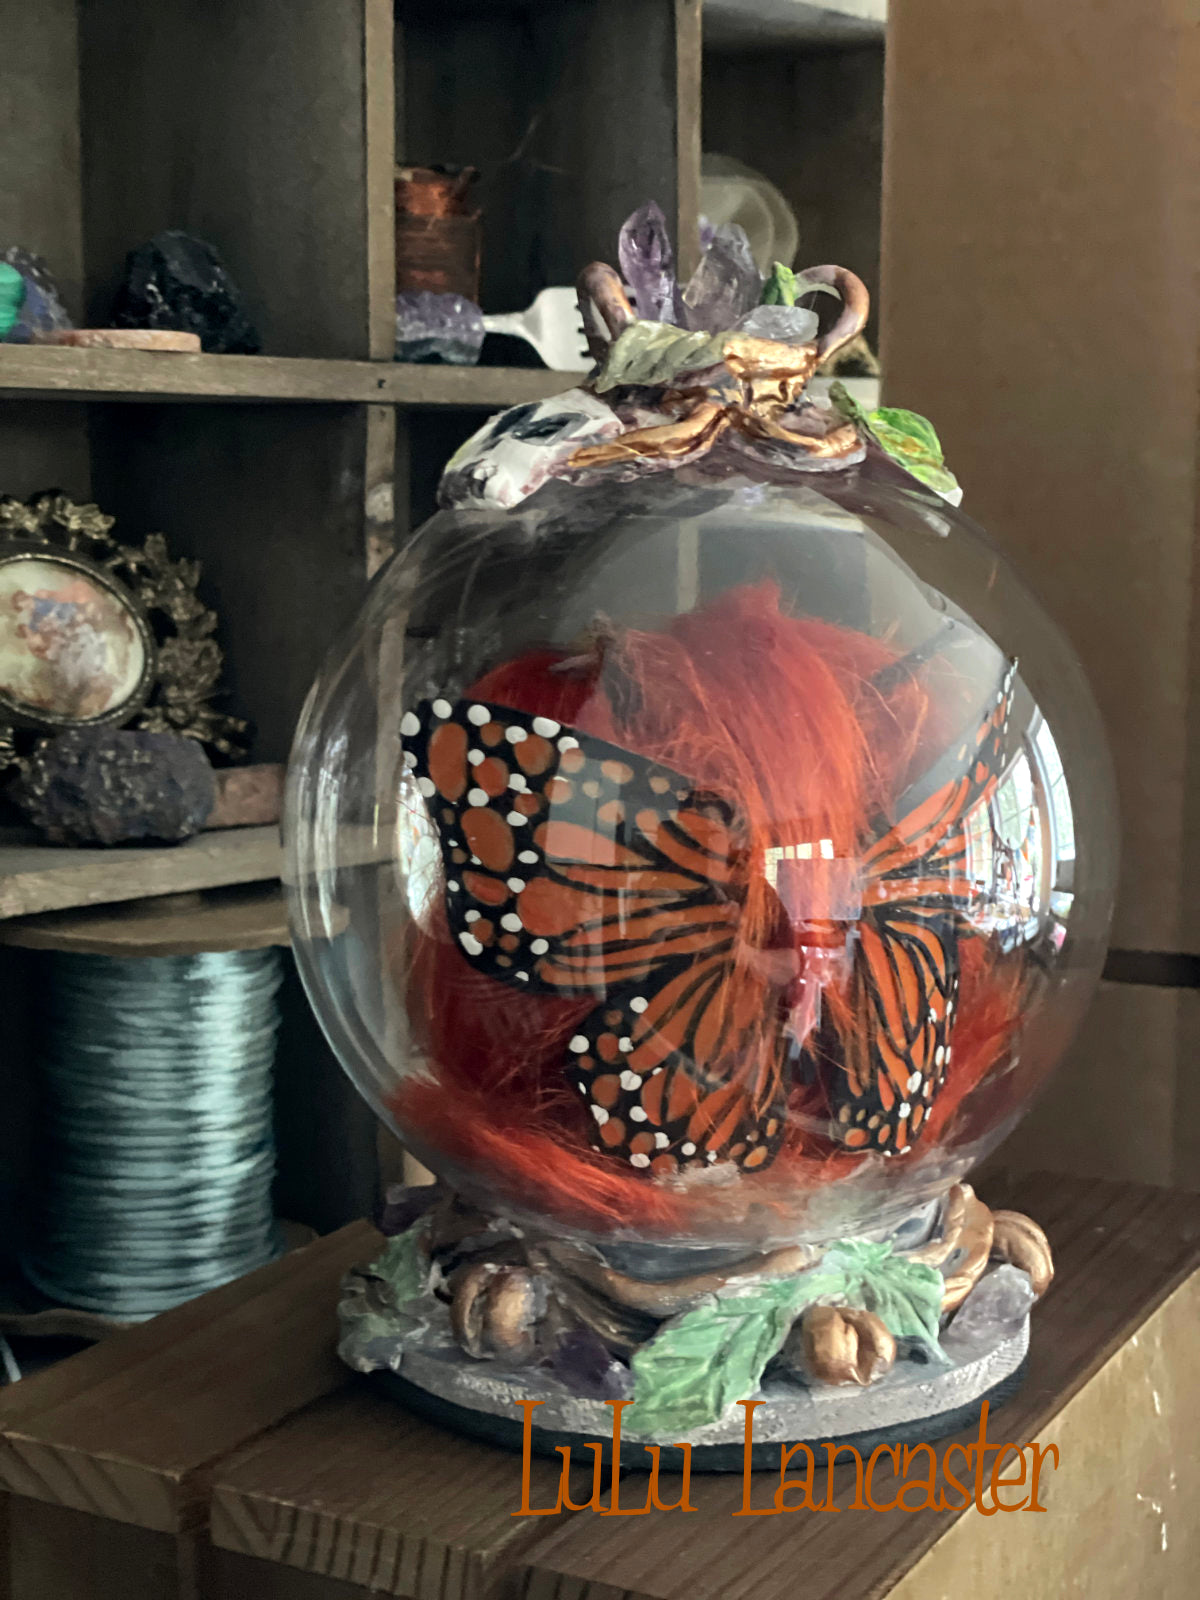 Sayaka Globe~ Monarch Butterfly Original LuLu Lancaster Art Doll